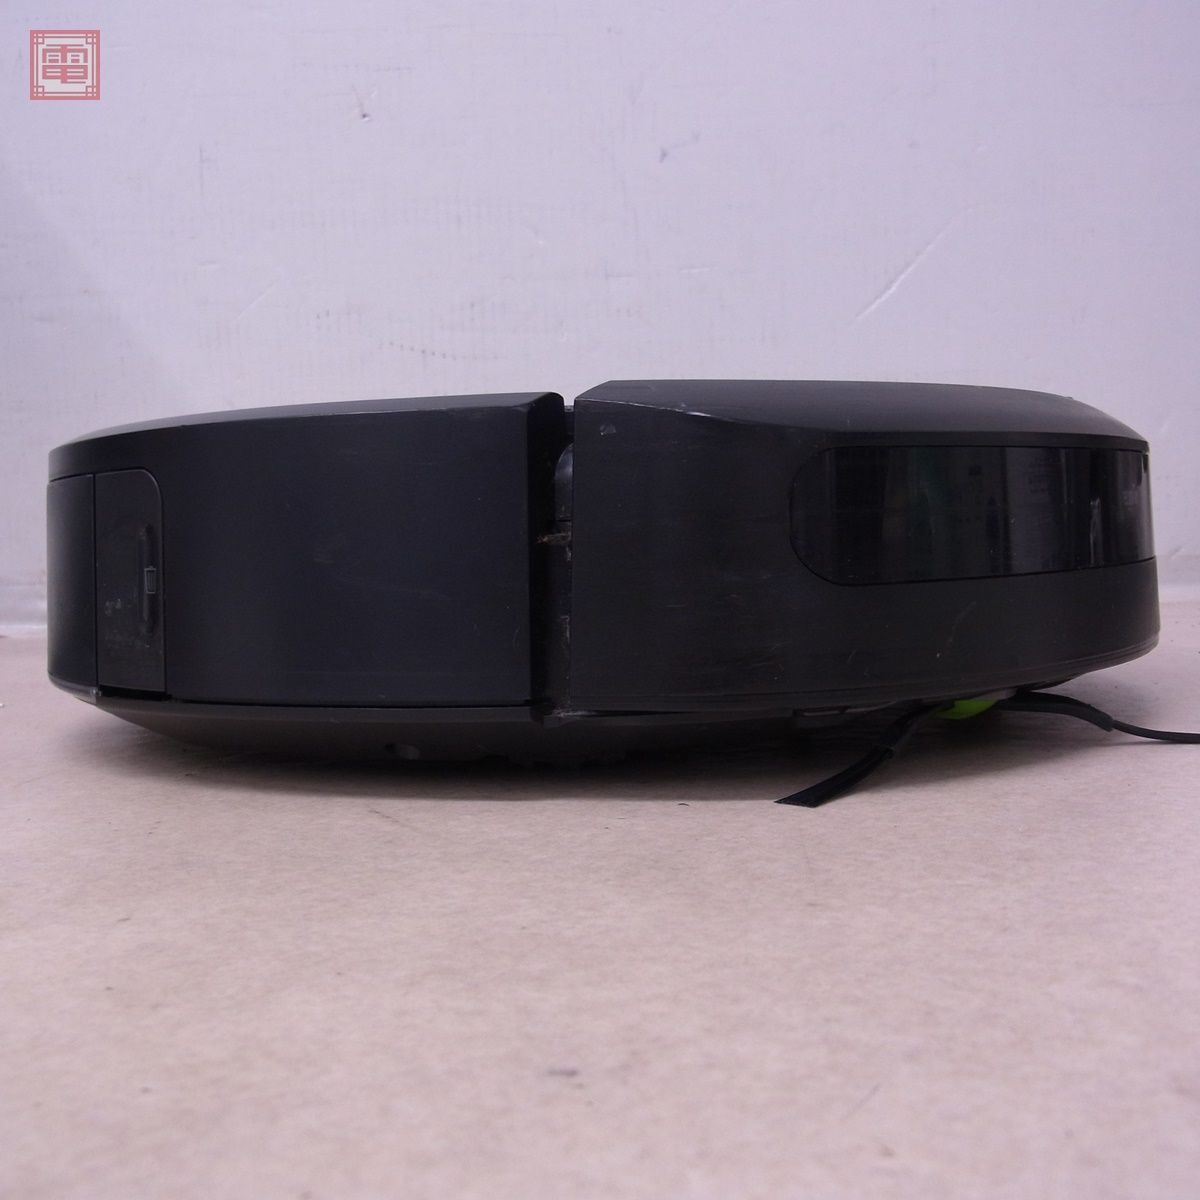 *iRobot robot vacuum cleaner Roomba i3 + Home base attaching I robot roomba Junk [40